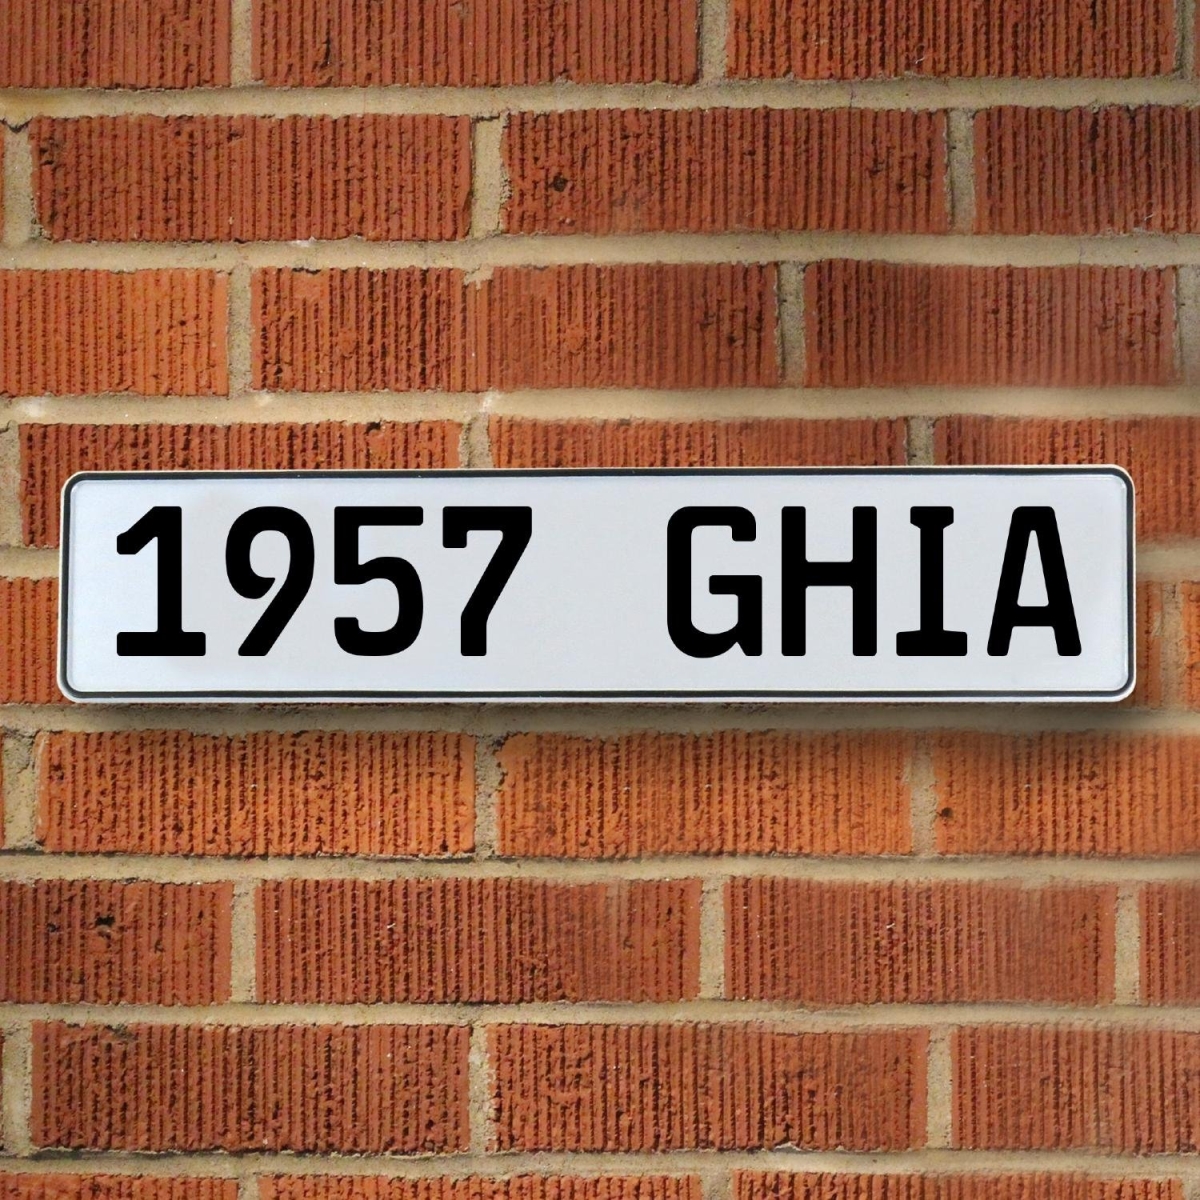 785920 1957 Ghia - White Aluminum Street Sign Mancave Euro Plate Name Door Sign Wall